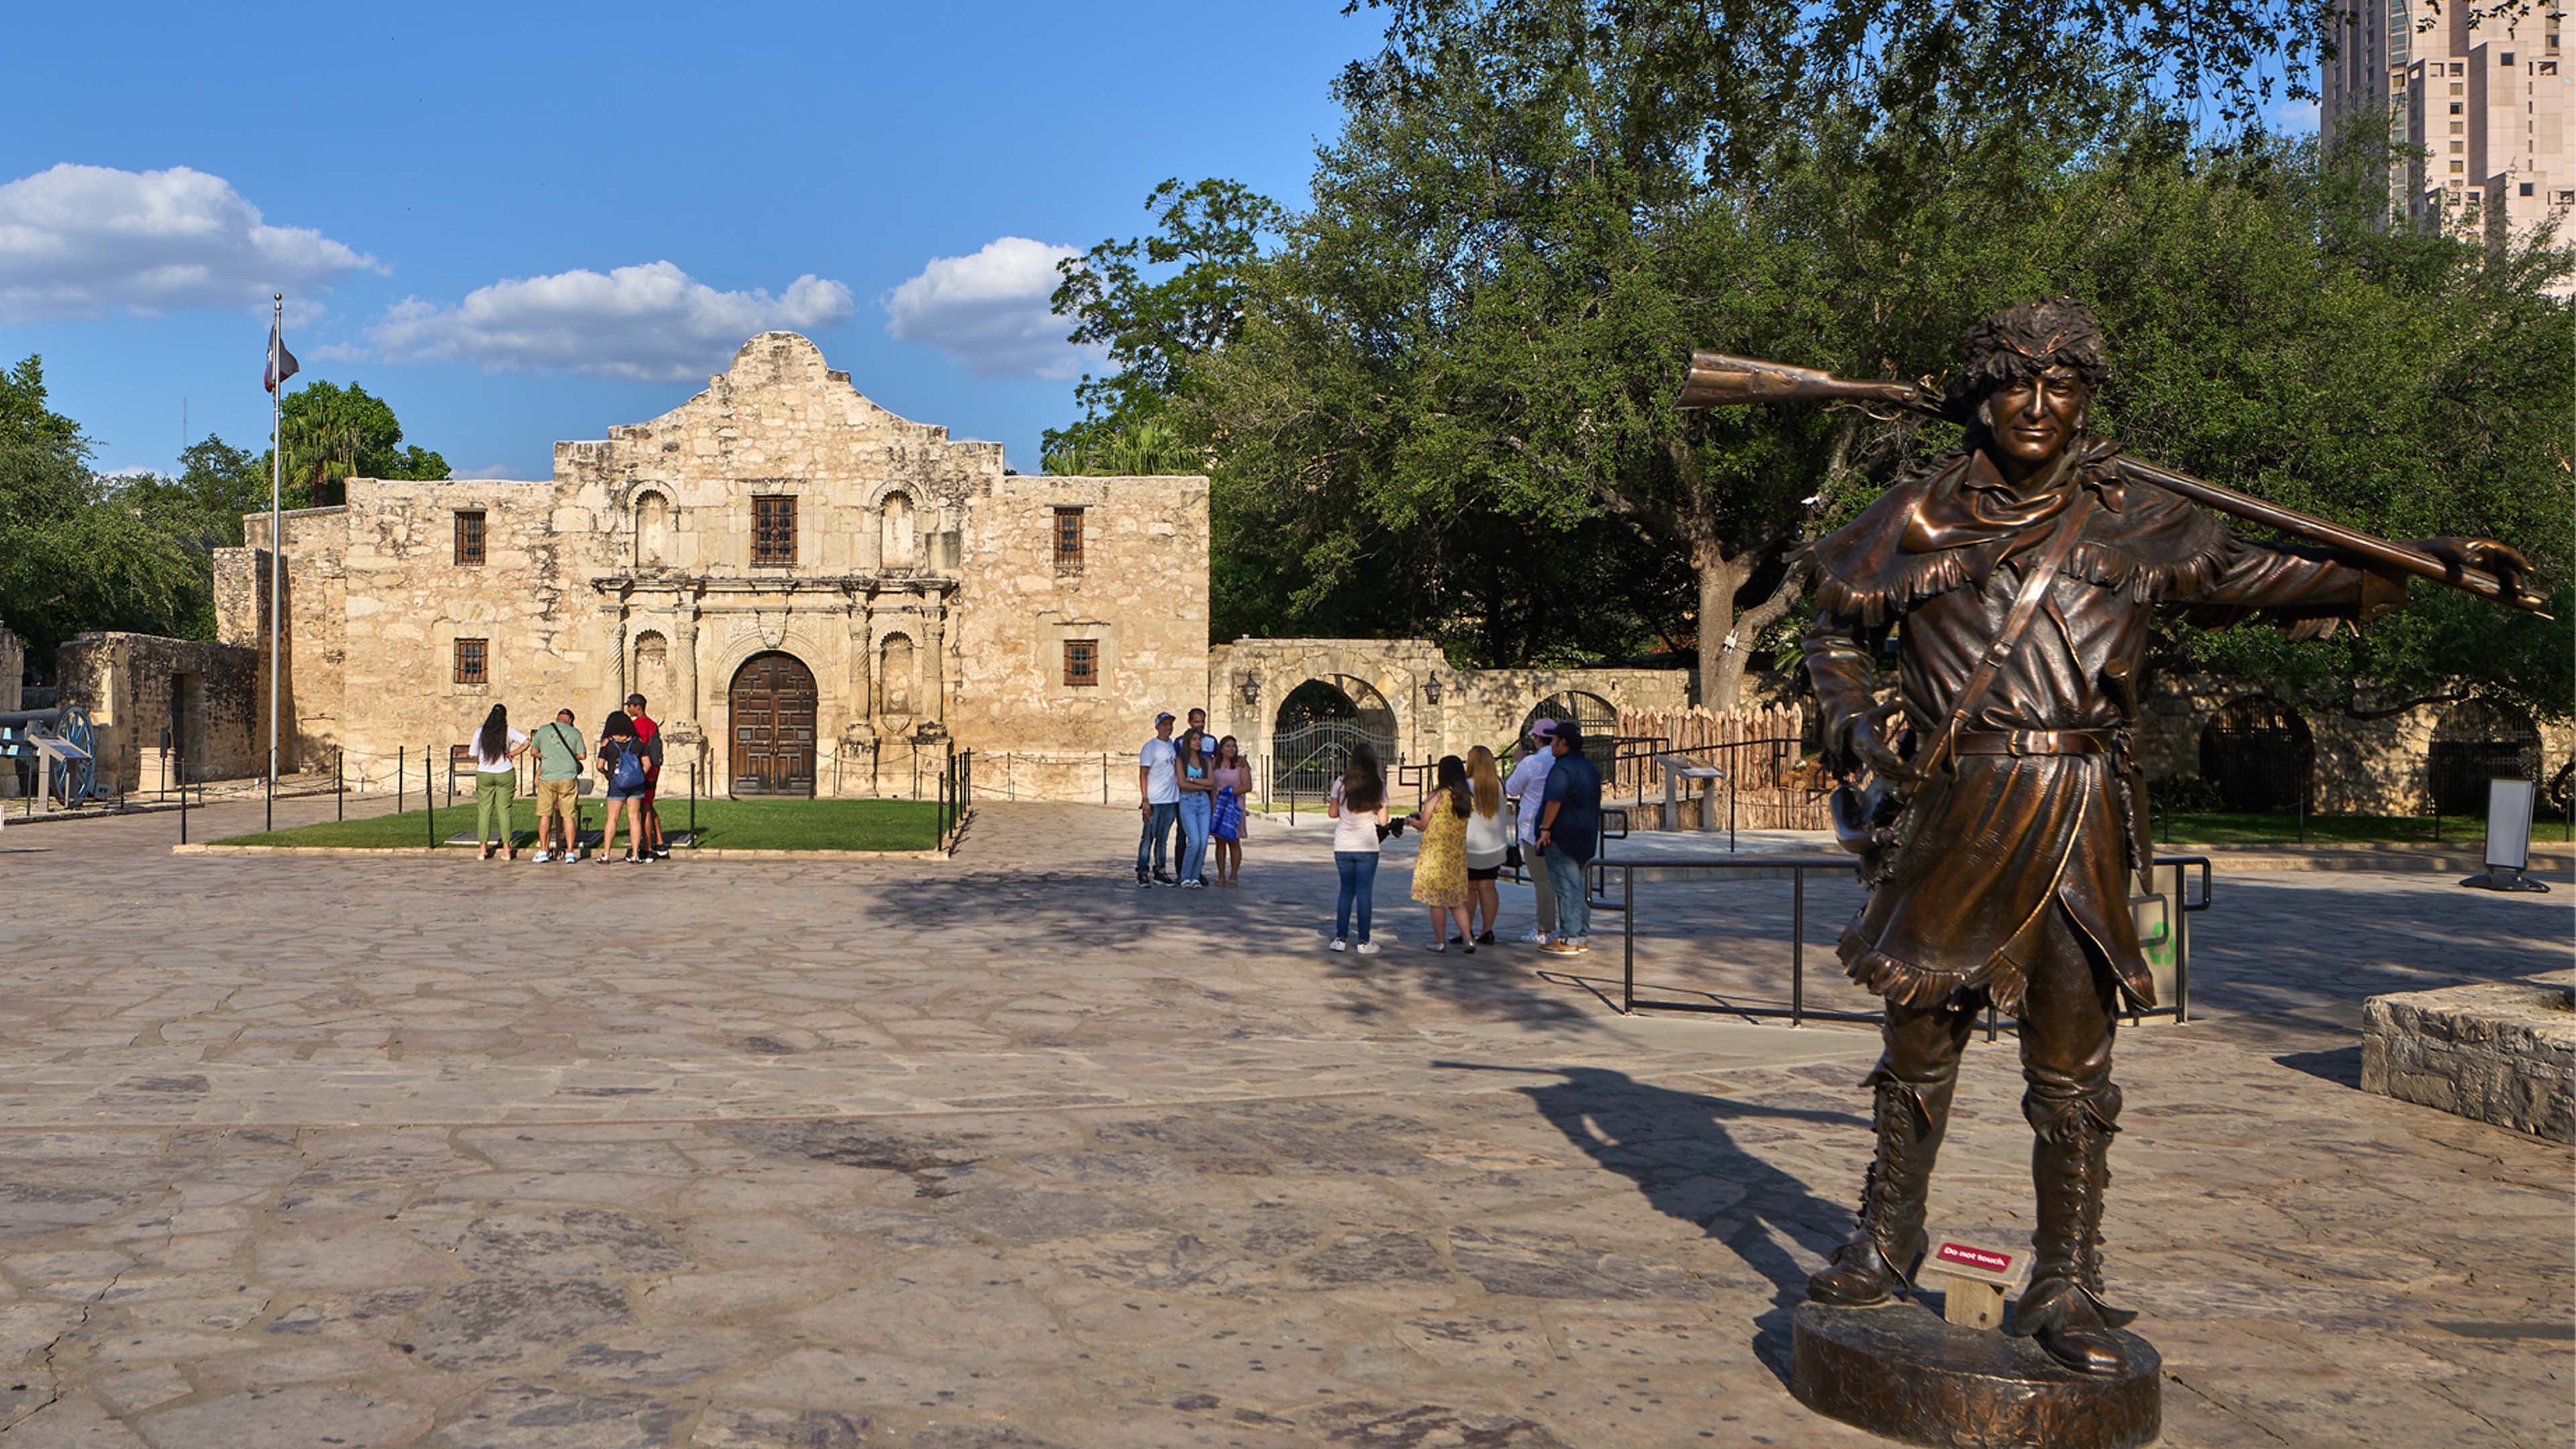 Memorial statue in front of Alamo